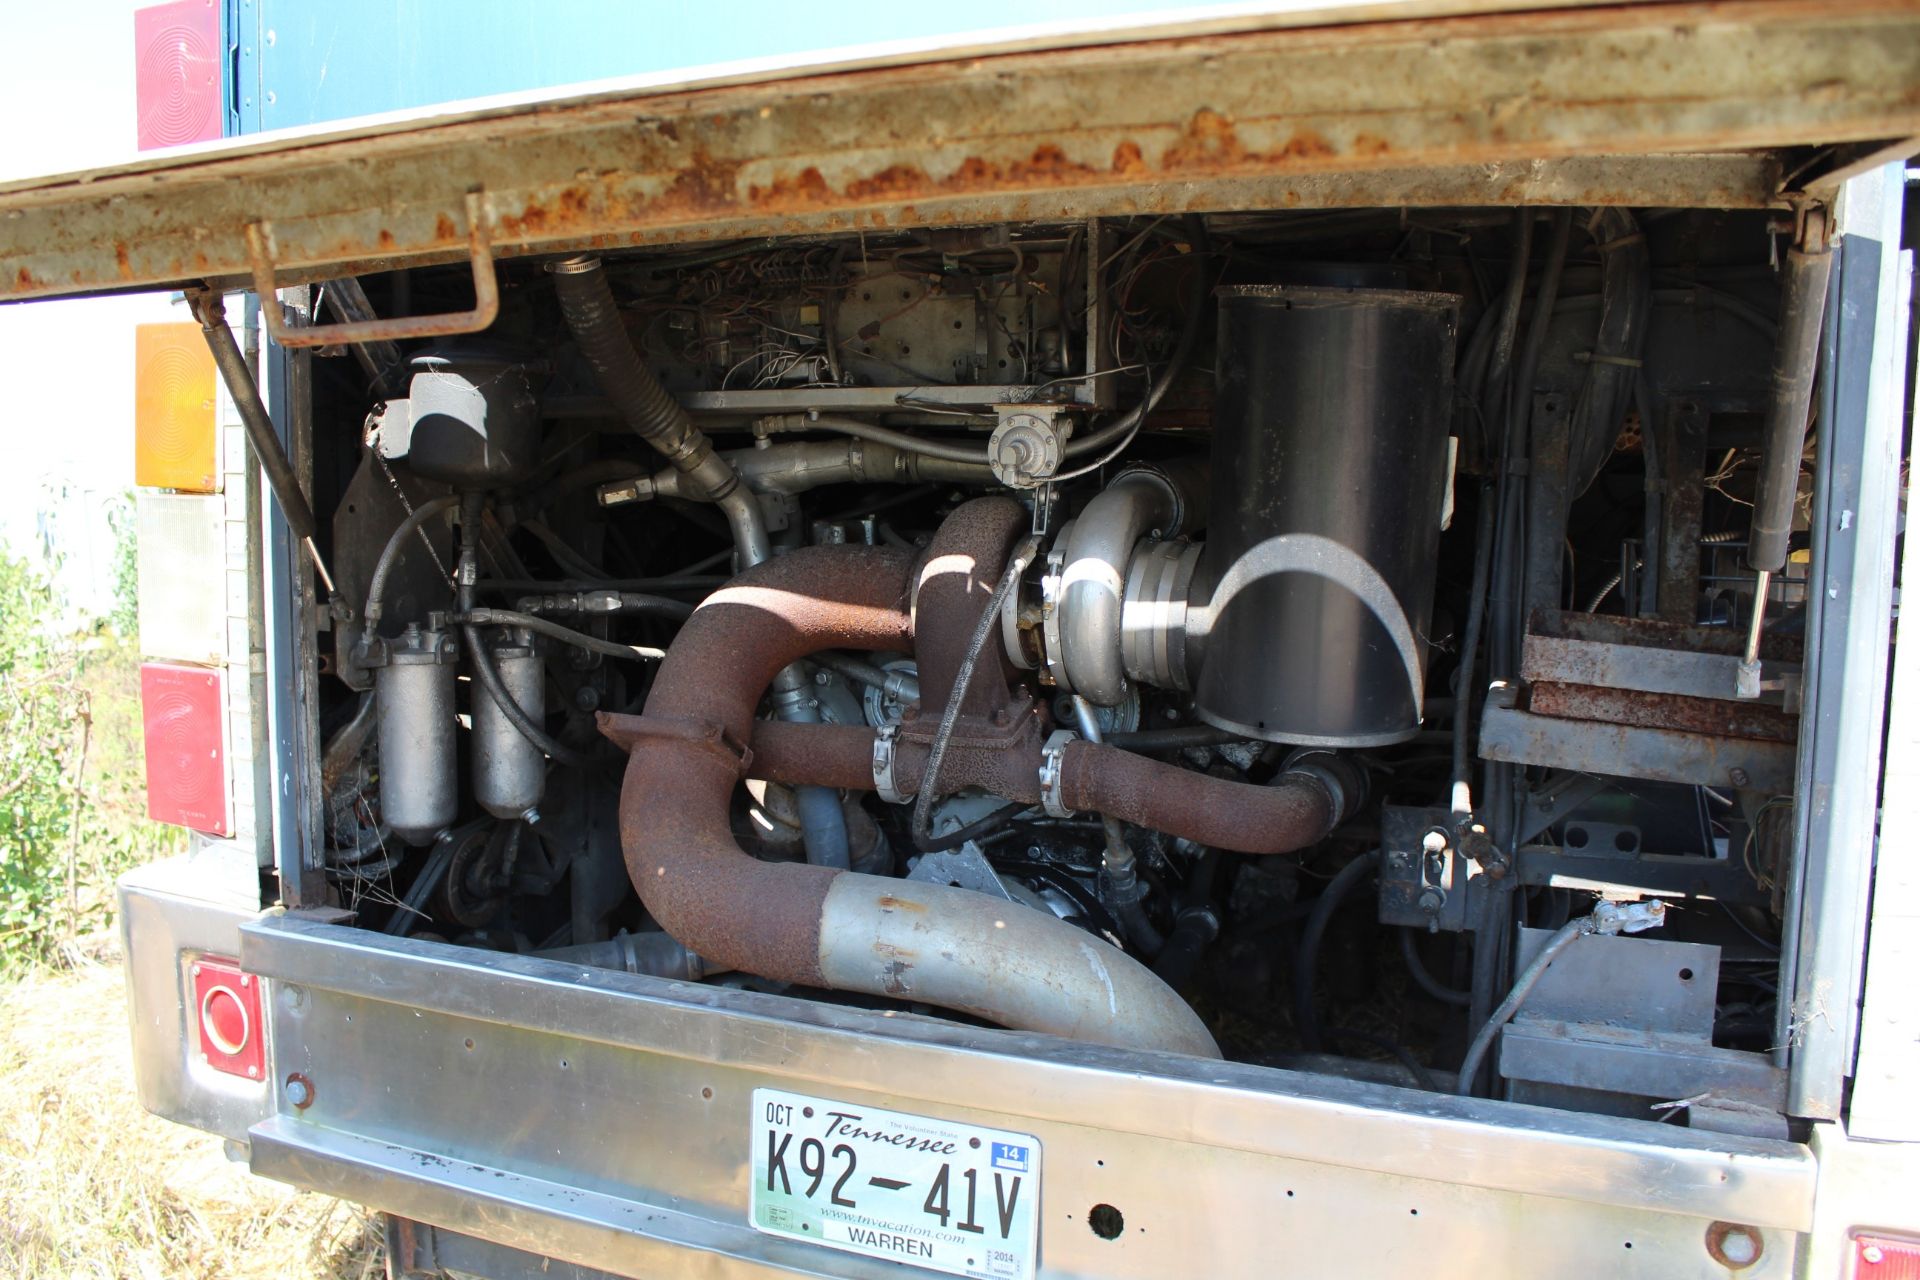 1974 Eagle Diesel Pusher Motor Home w/ 8V92 Turbo Diesel, ODO 194,407 Vin 948945 - Title - Image 7 of 8